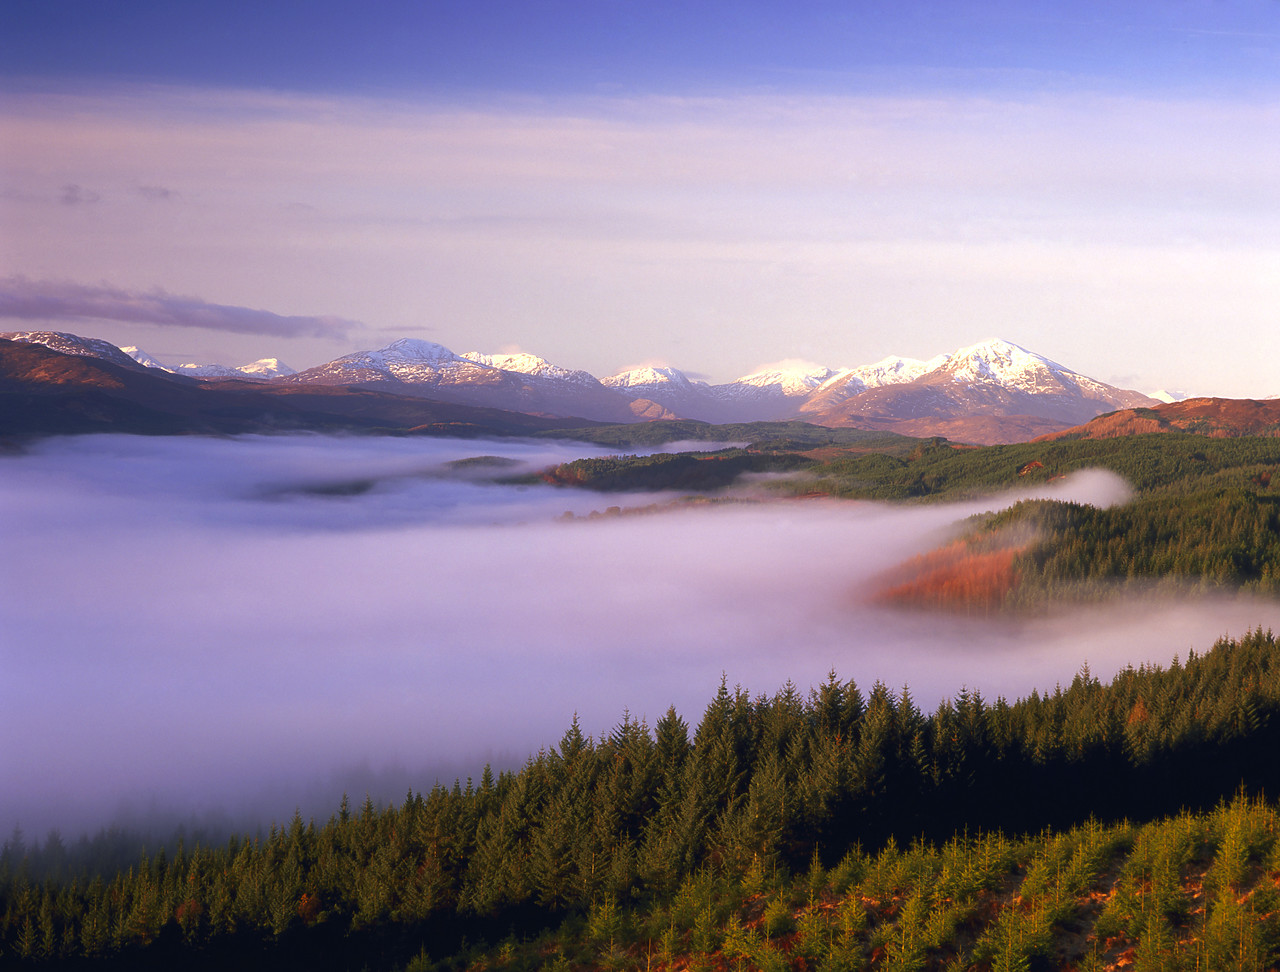 #010289-1 - Low cloud in Glen Garry, Highland Region, Scotland